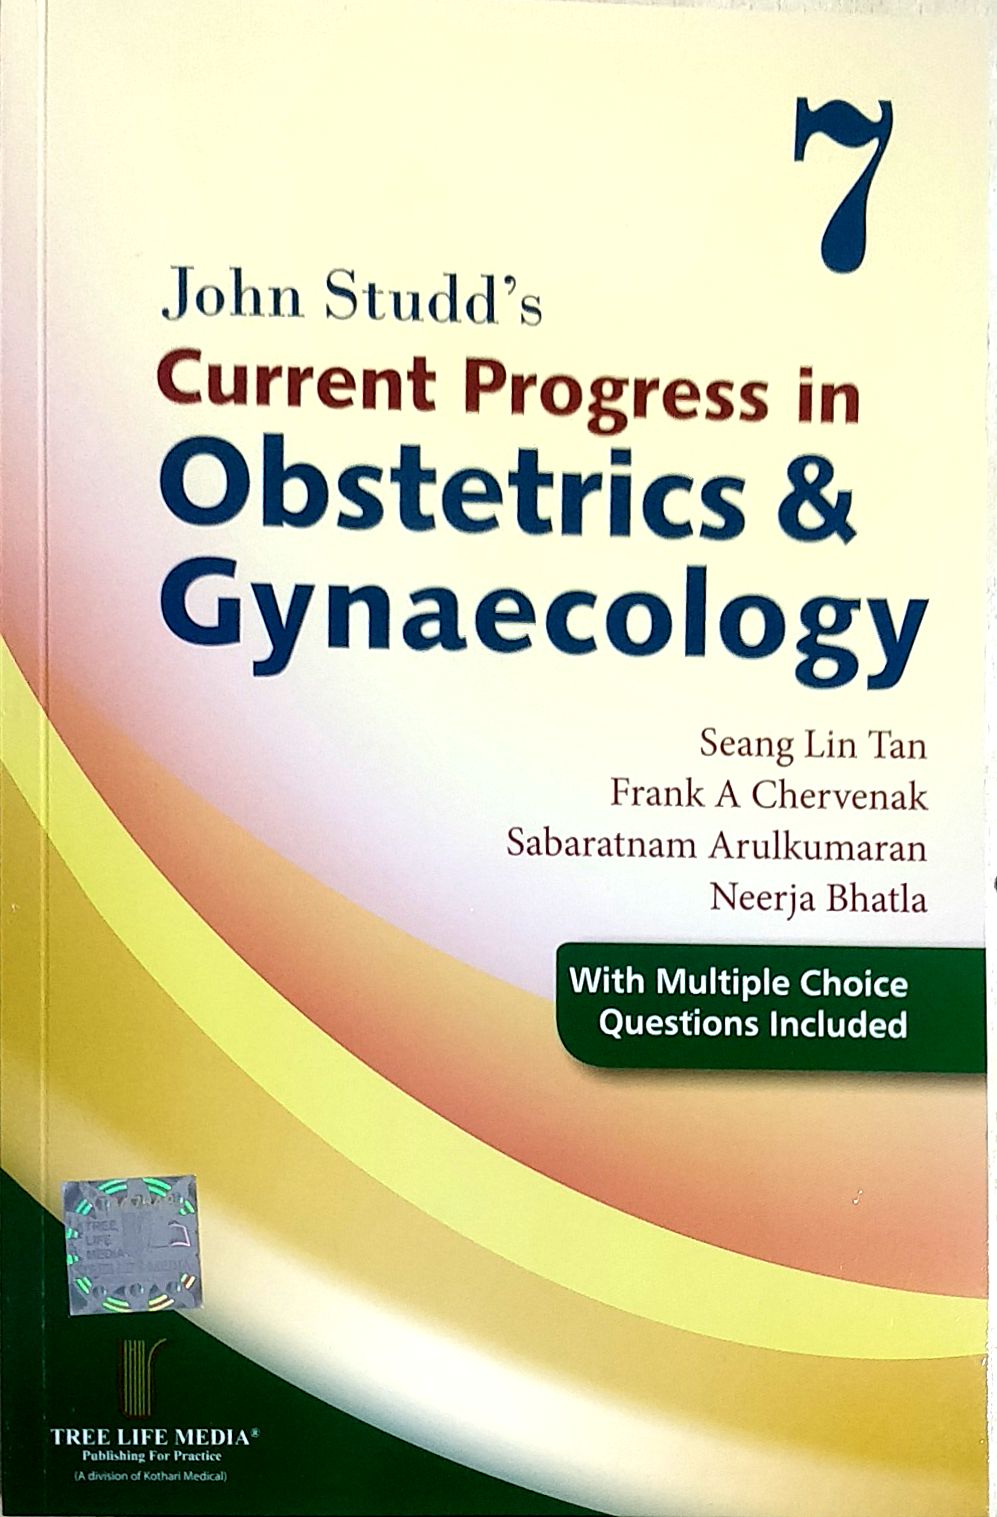 John Studd's Current Progress in Obstetrics & Gynaecology Volume 7